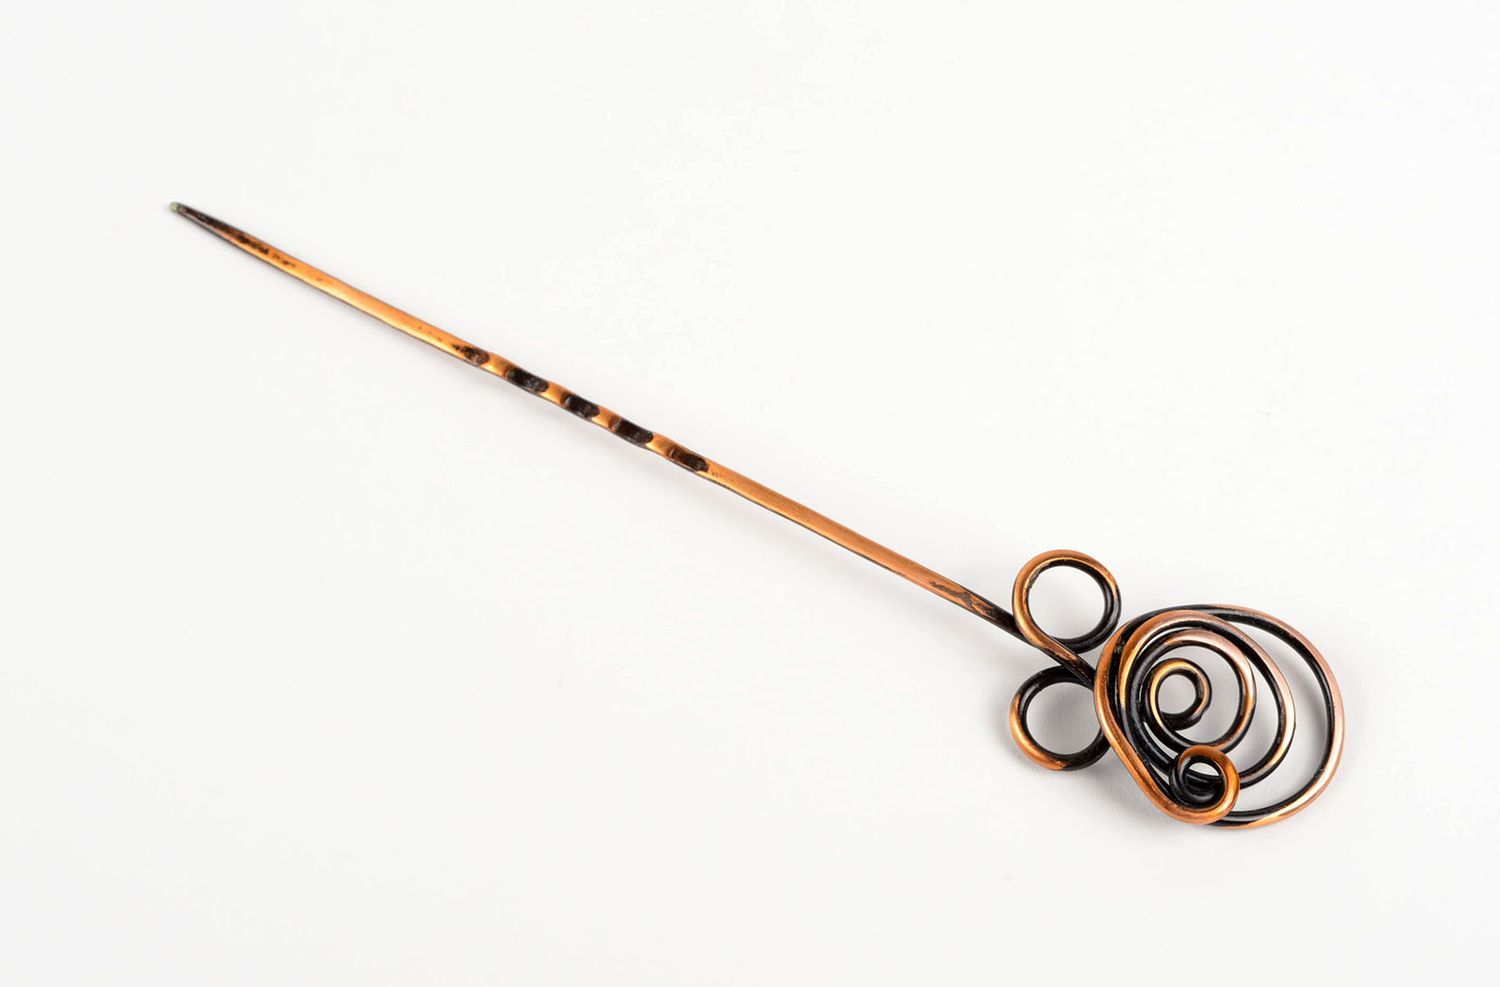 Handmade hair pin designer hair accessory gift ideas metal hair pin gift for her photo 1